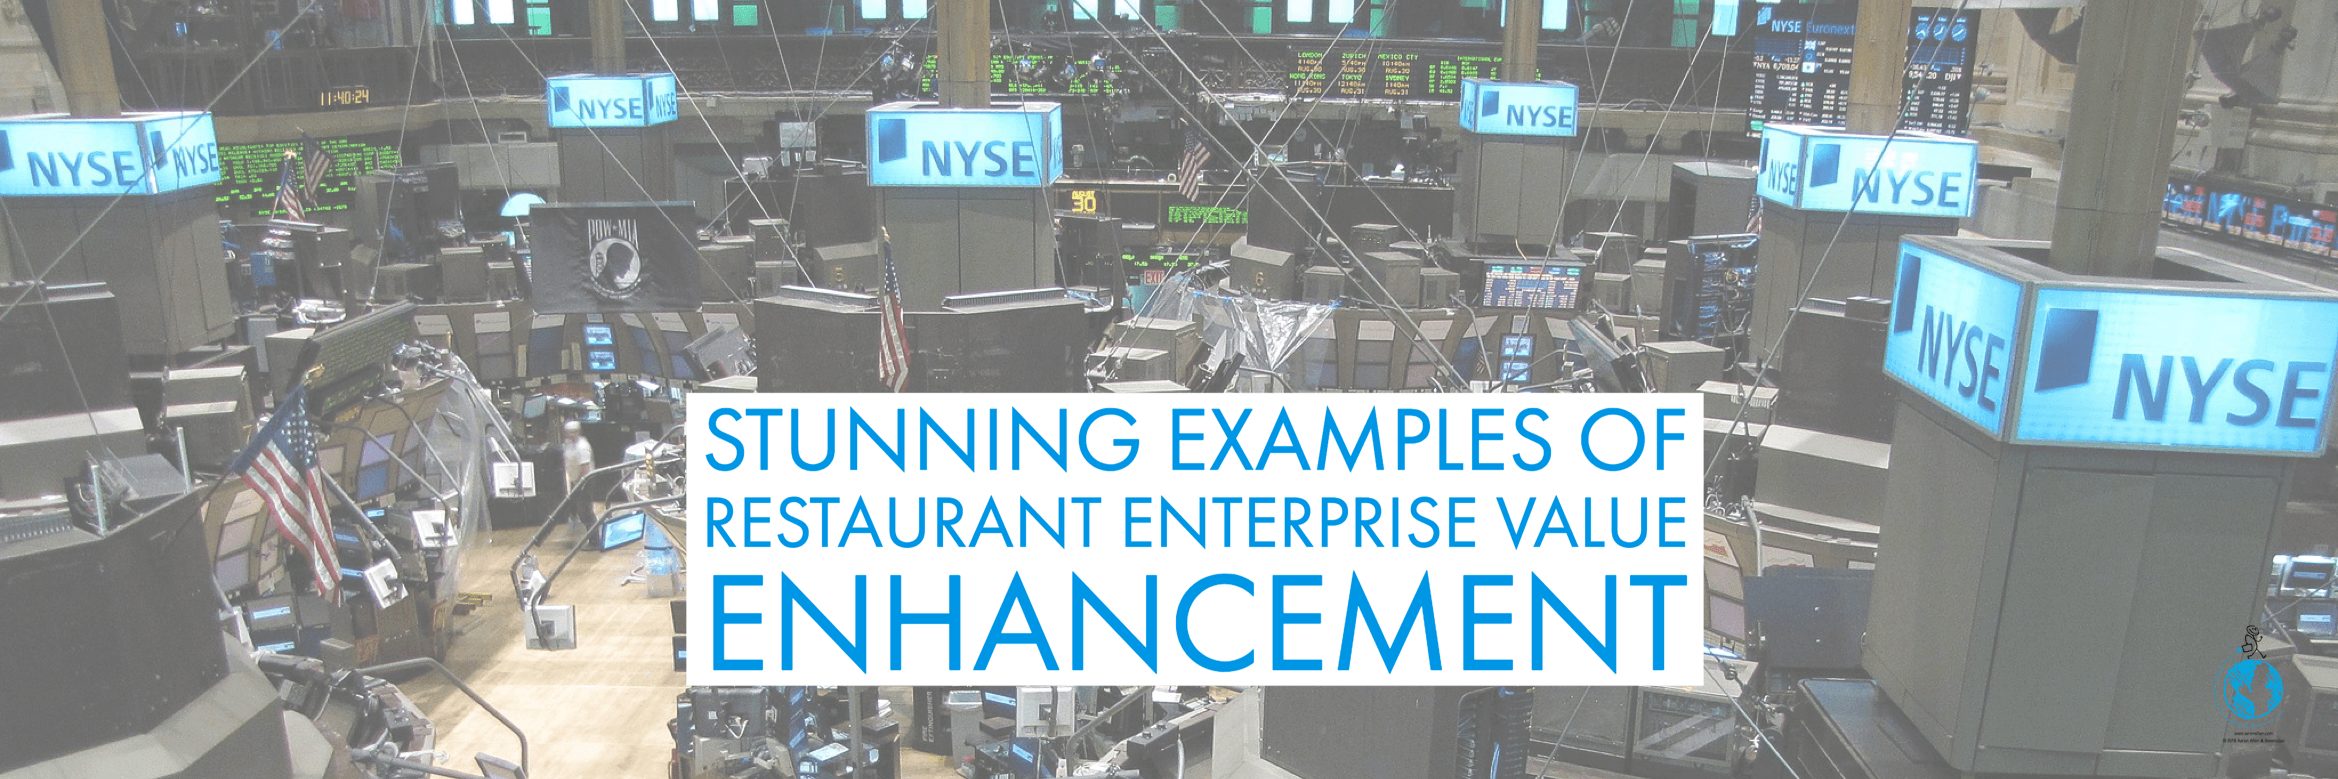 Restaurant Enterprise Value Enhancement